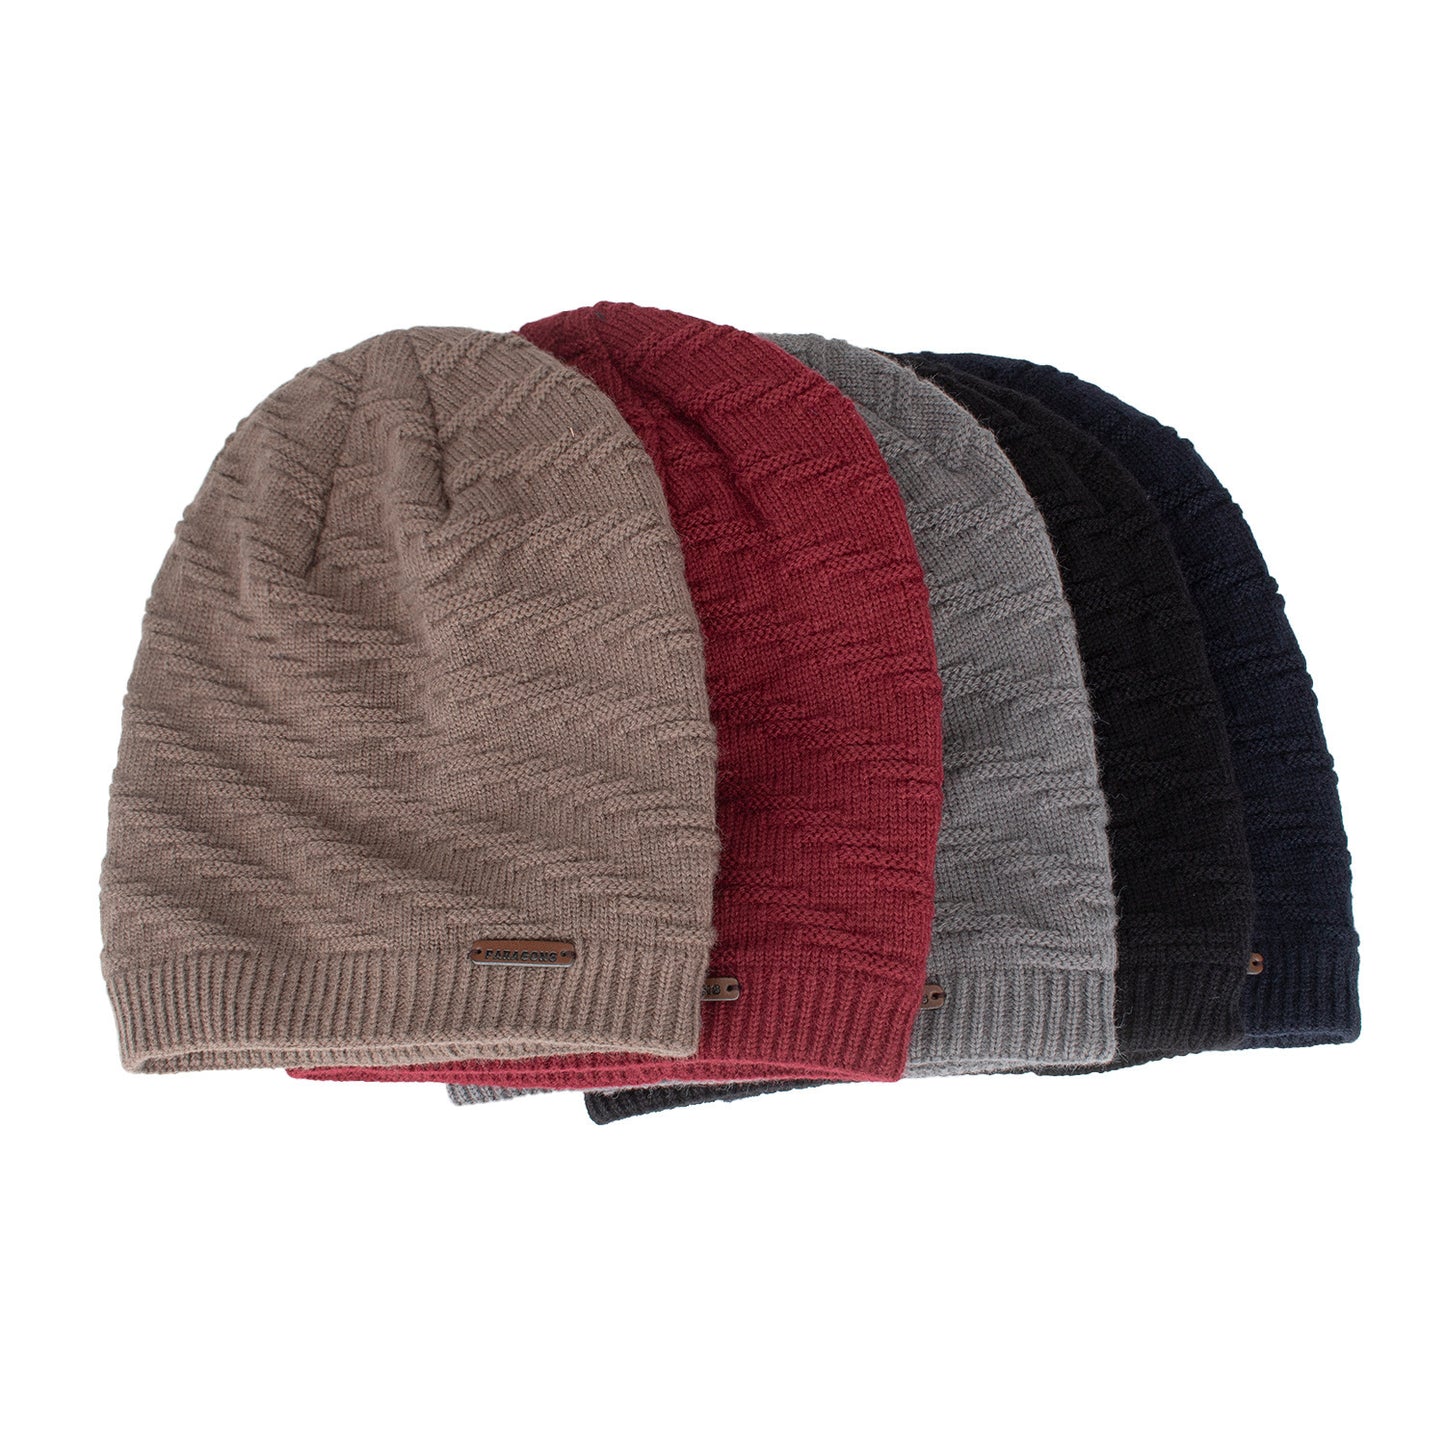  Military Matter Knitted Winter Fleece Warm Head Men's Outdoor Hat | The Best CS Tactical Clothing Store